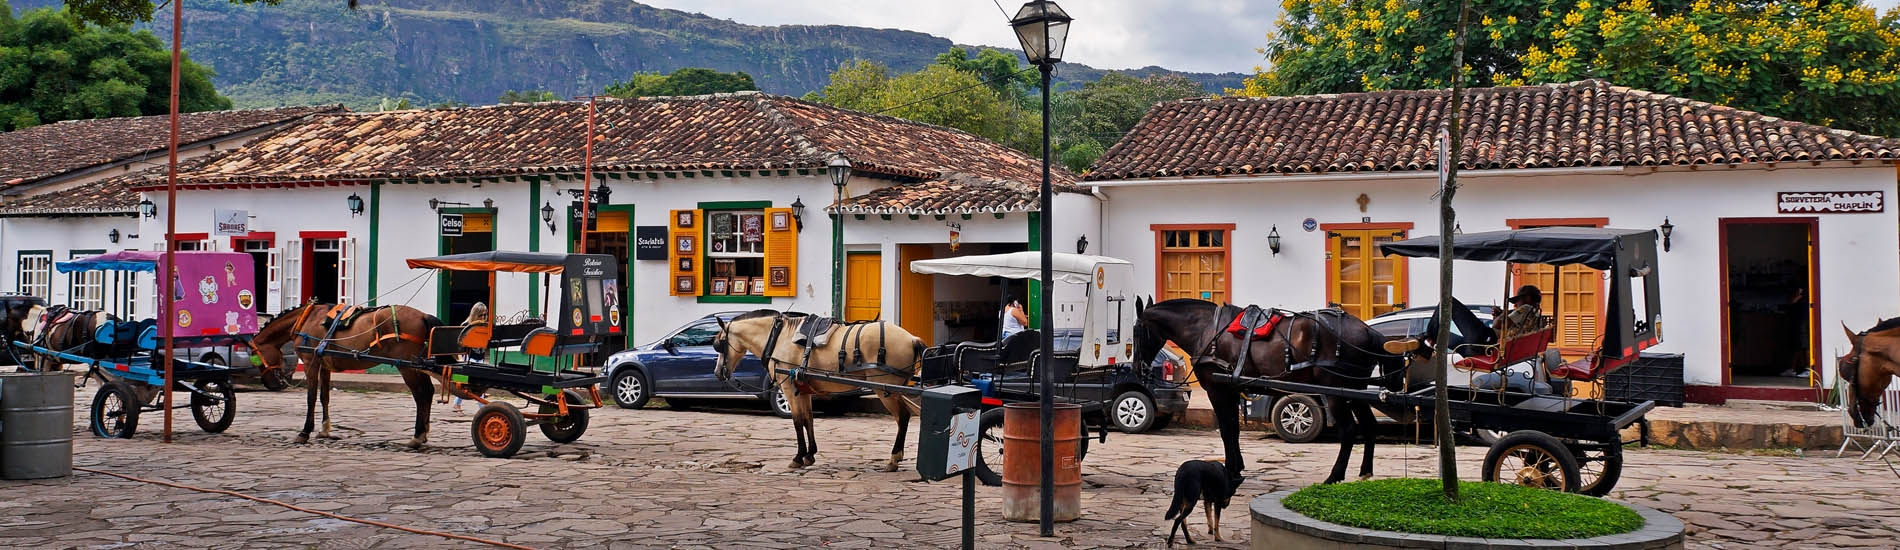 Tiradentes is one of the treasures of Brazilian history